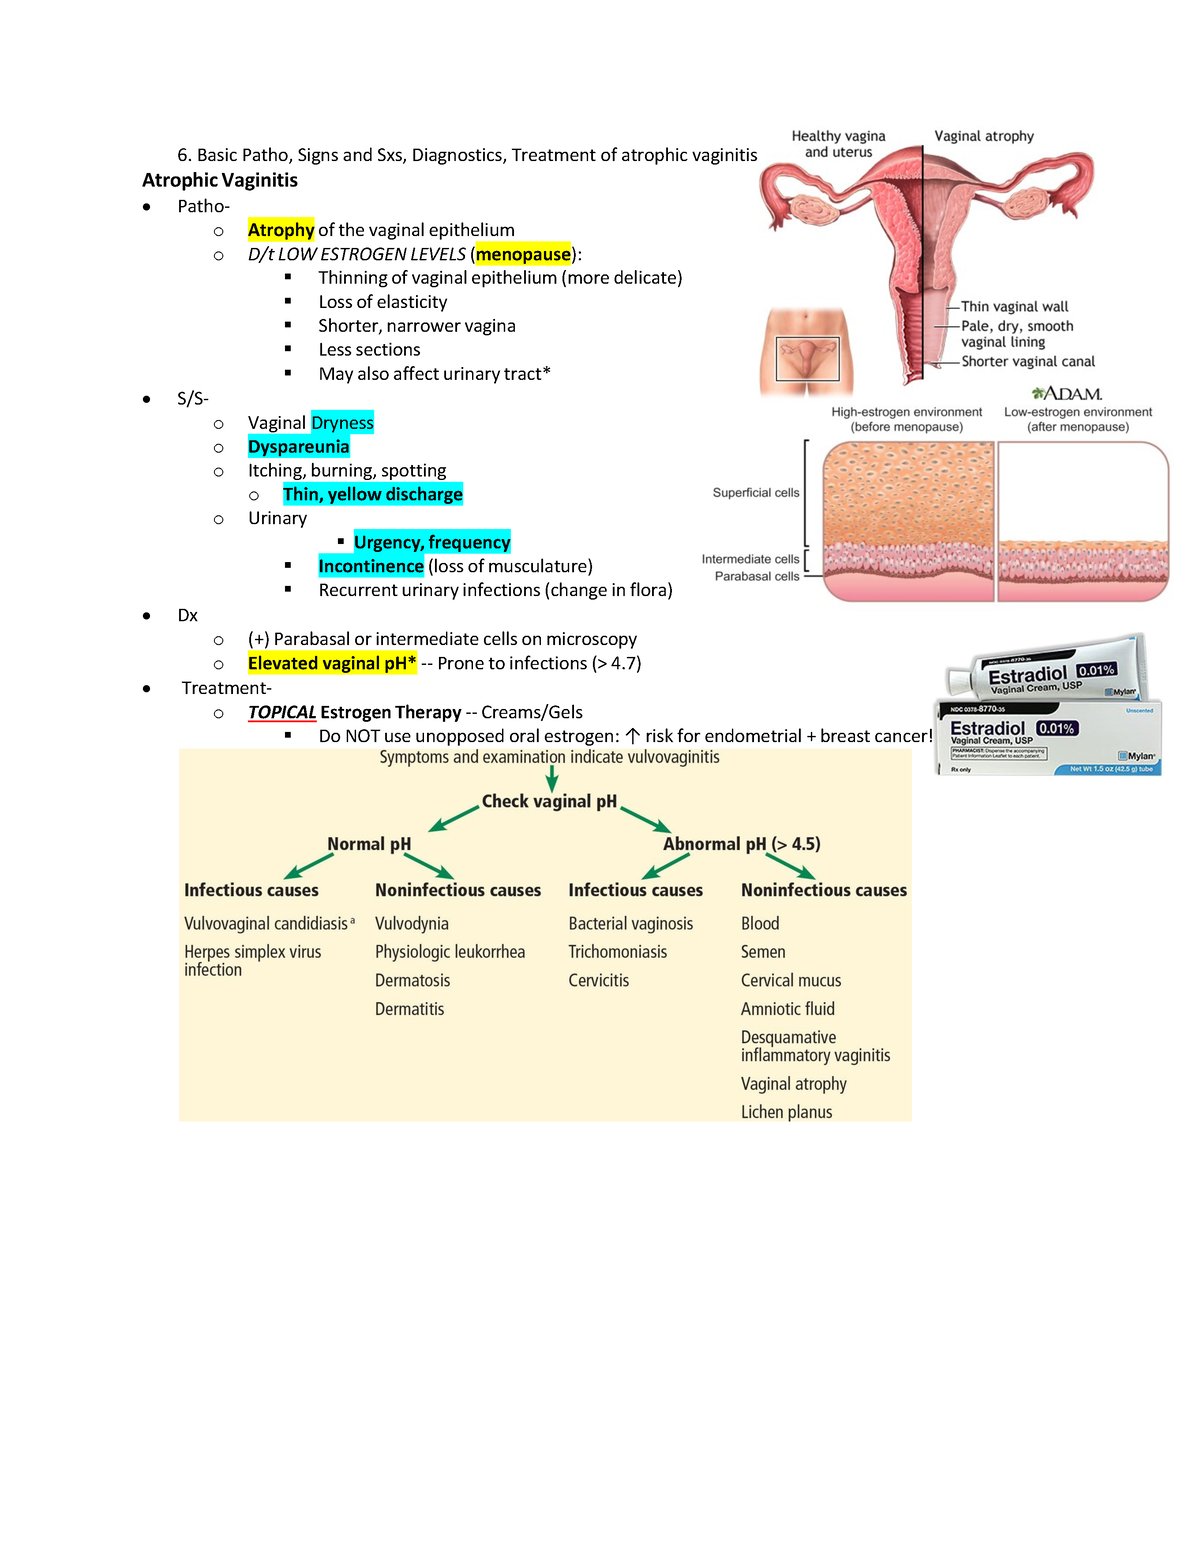 Atrophic Vaginitis & STIs - Basic Patho, Signs and Sxs